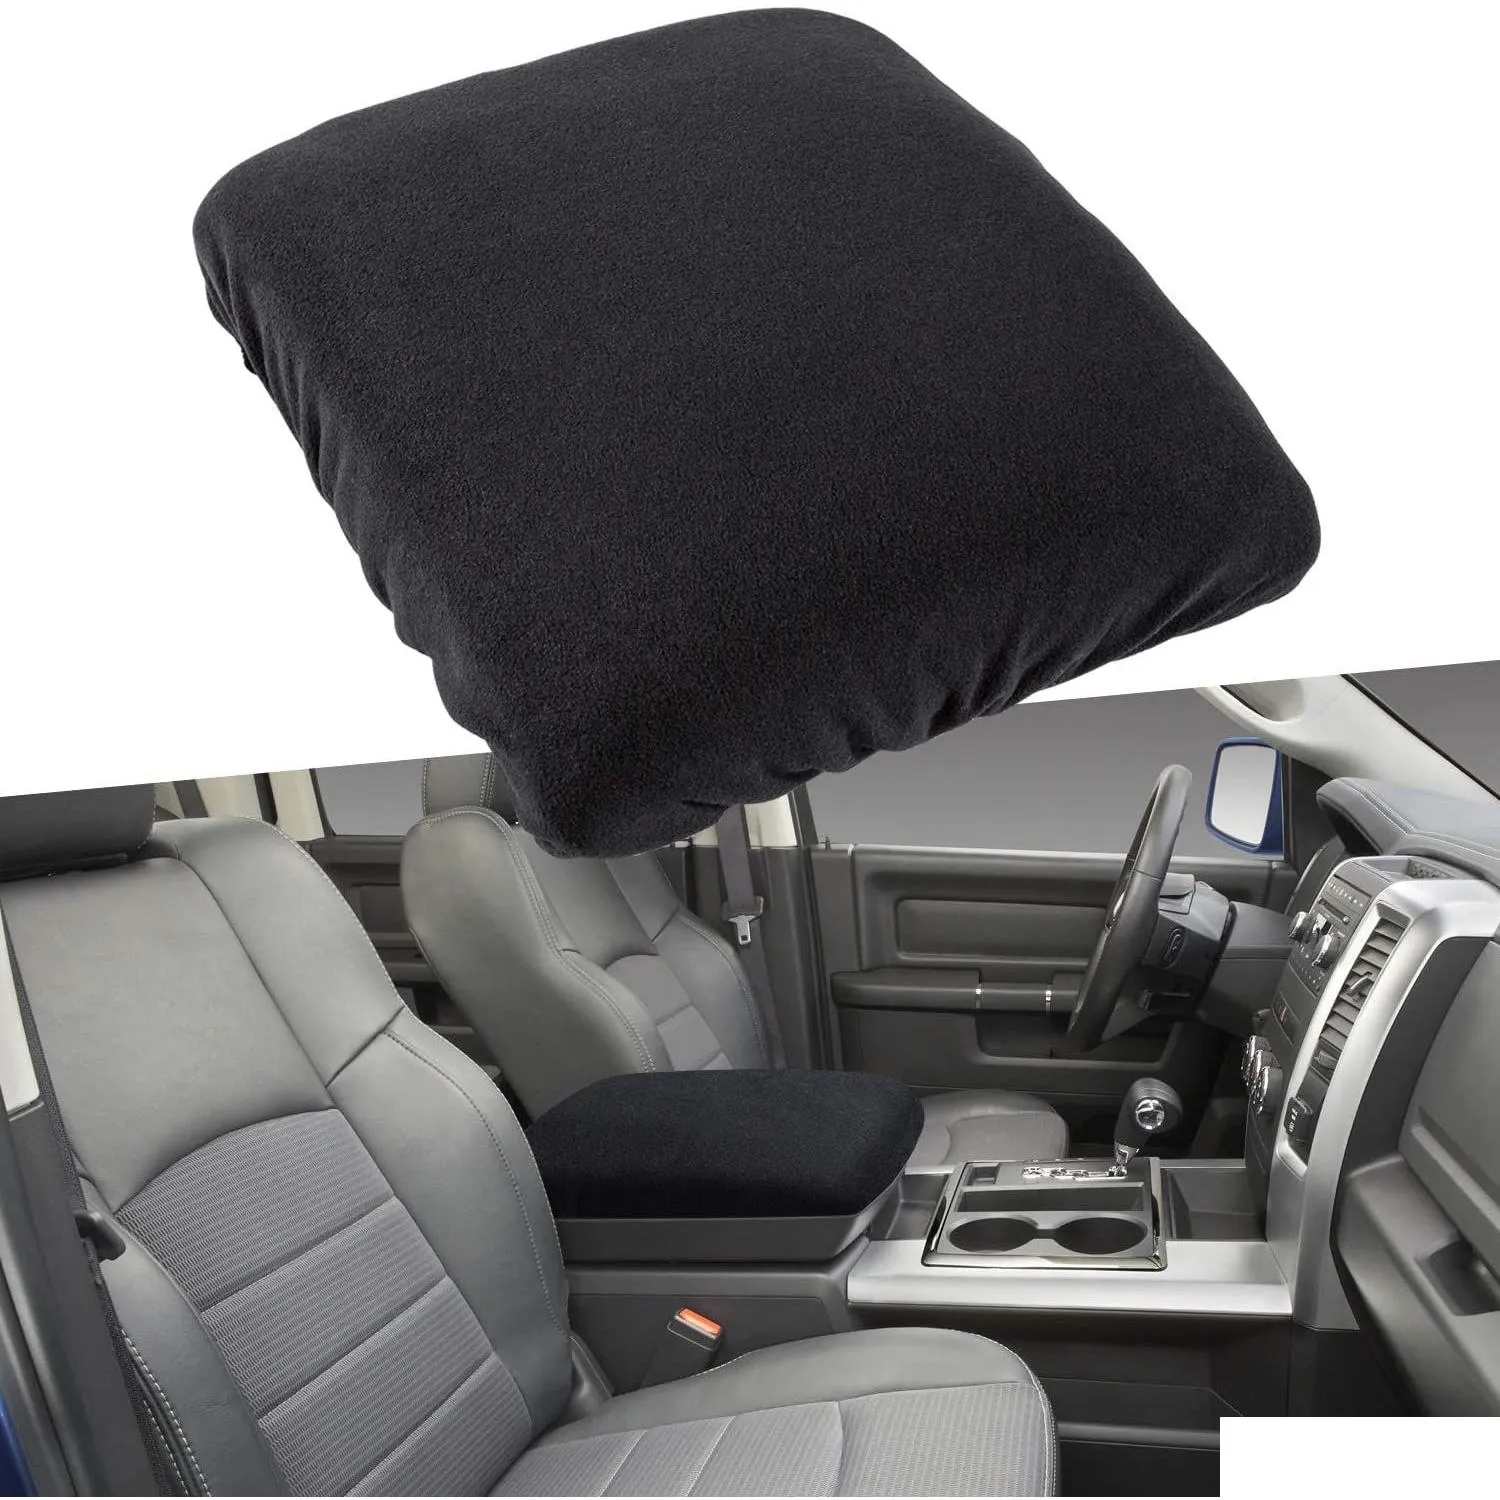 center console armrest pad cover for  ram 1500 2500 3500 4500 5500 pickup trucks 19932020 car armrest protector cushion all